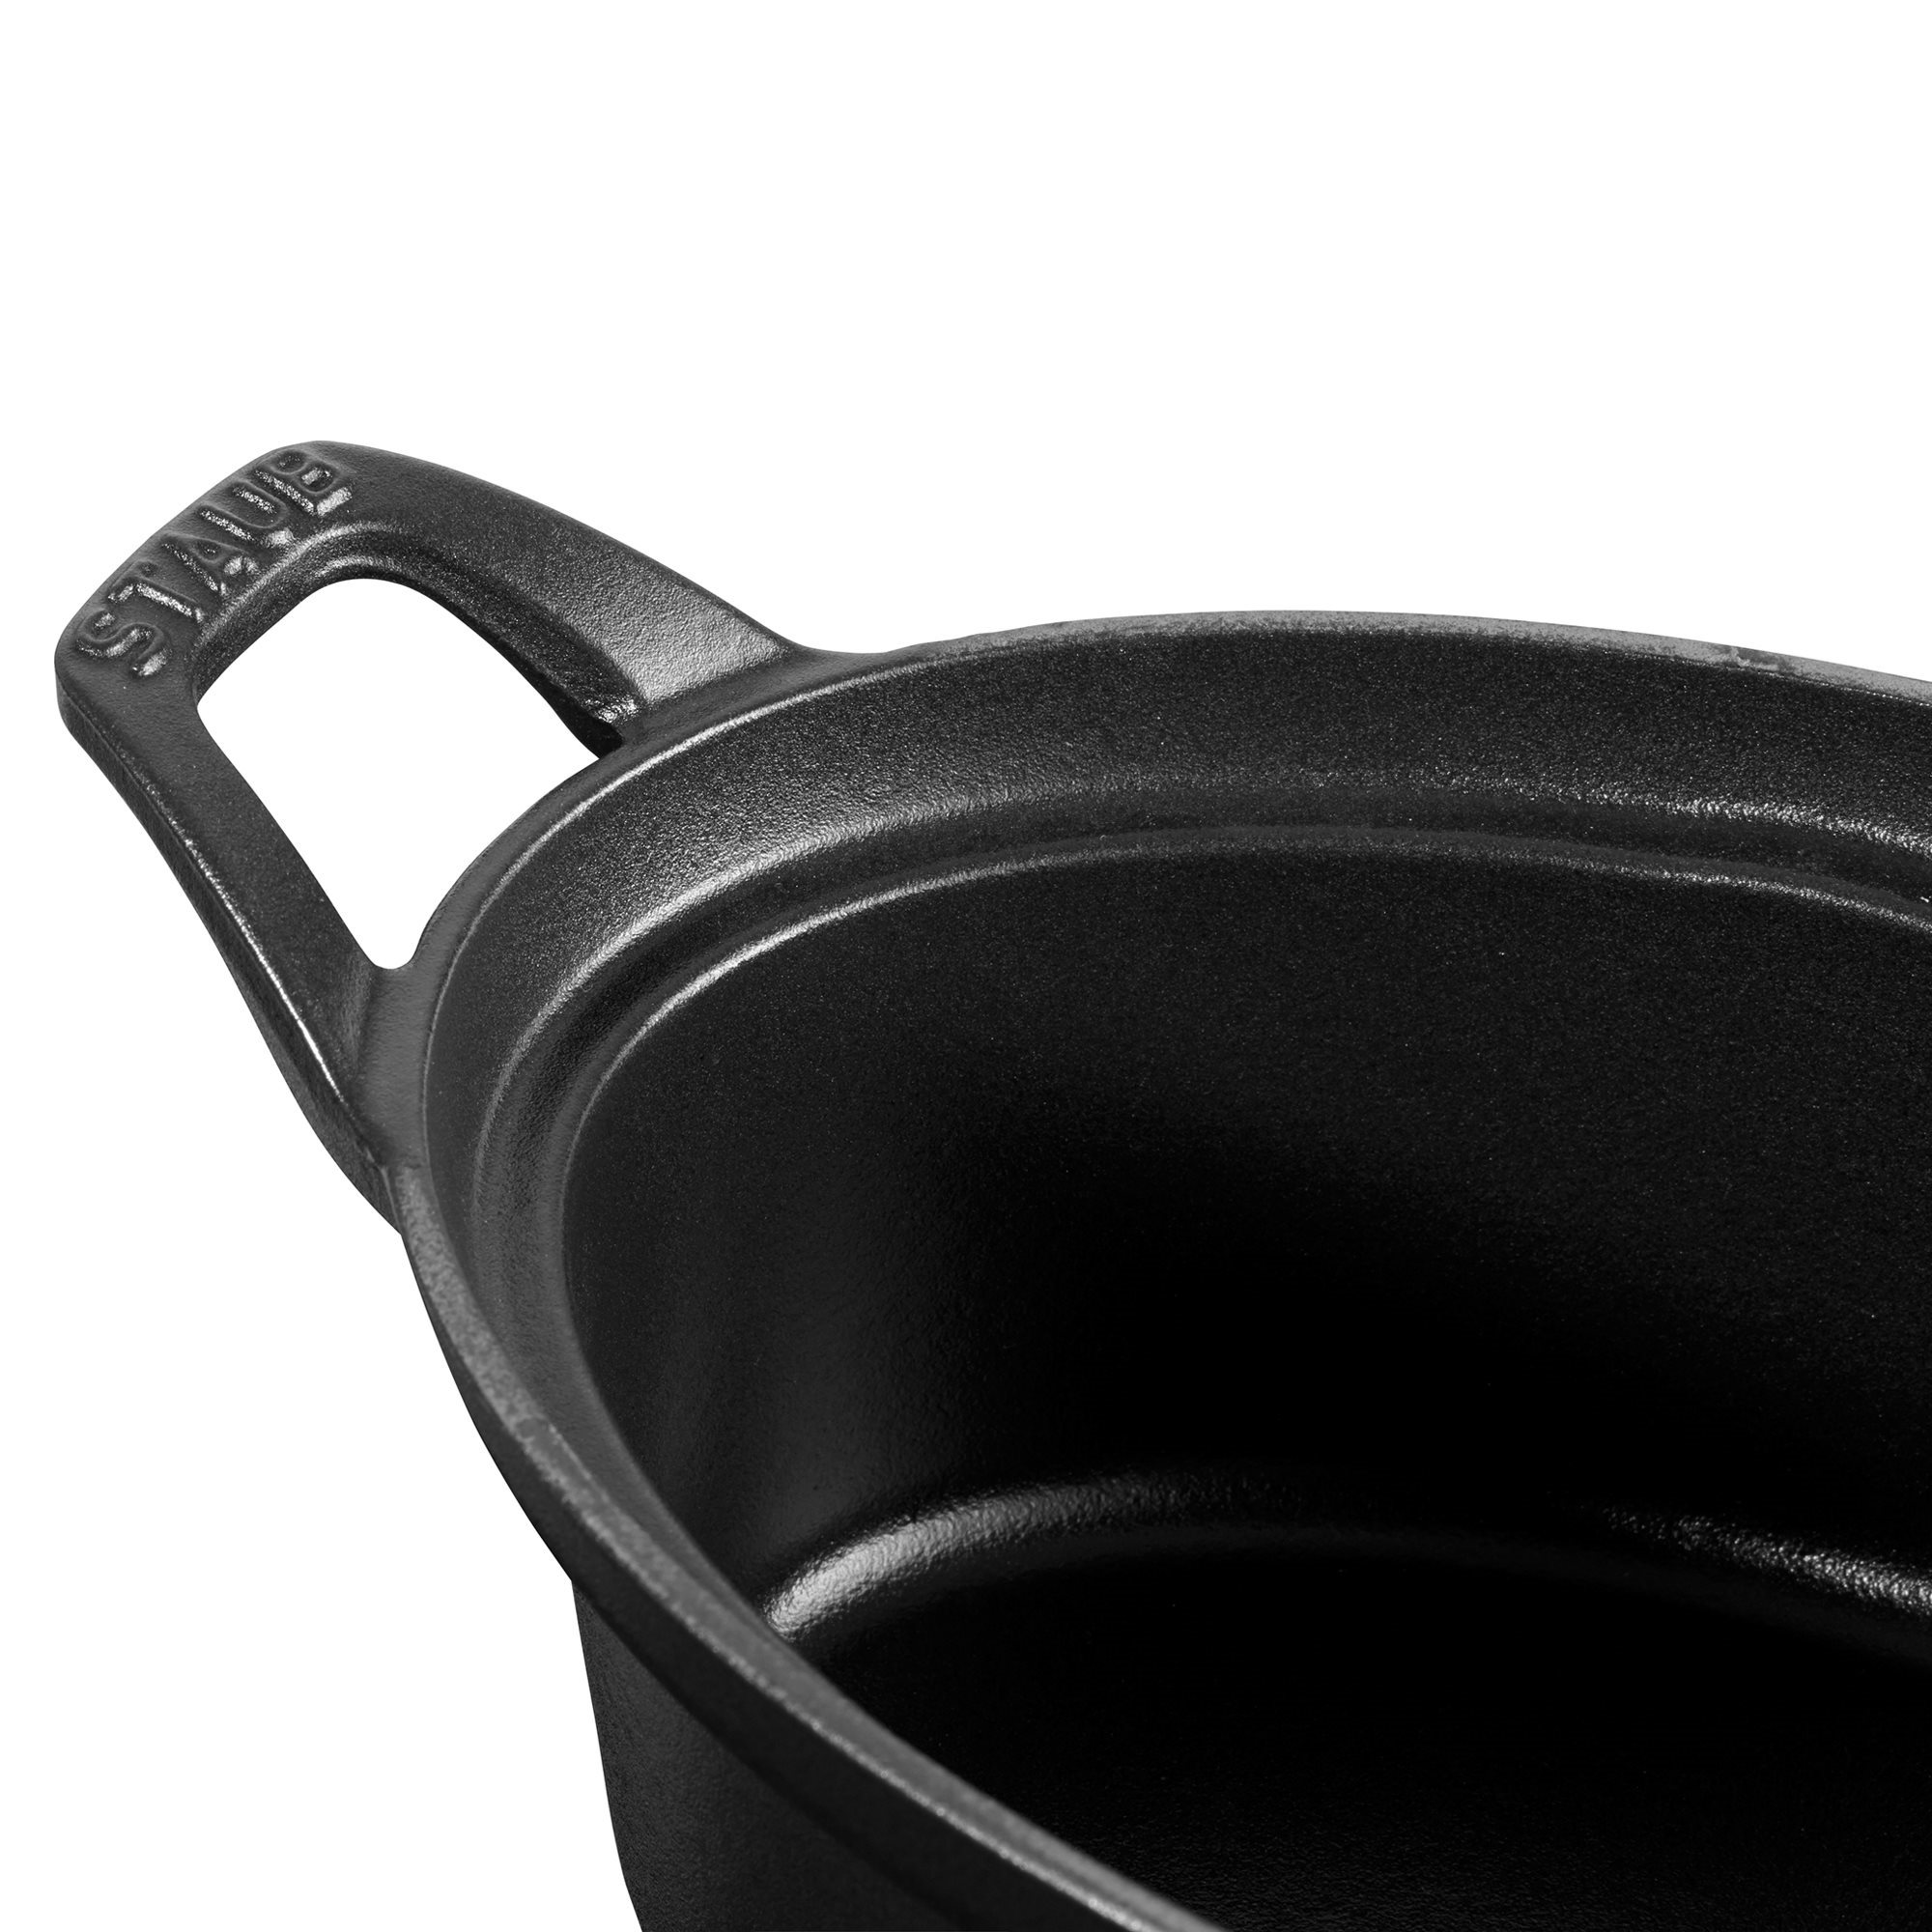 Cocotte oval cooking pot made of cast iron, La Coquette 23 cm/1.7 l,  <<Black>> - Staub